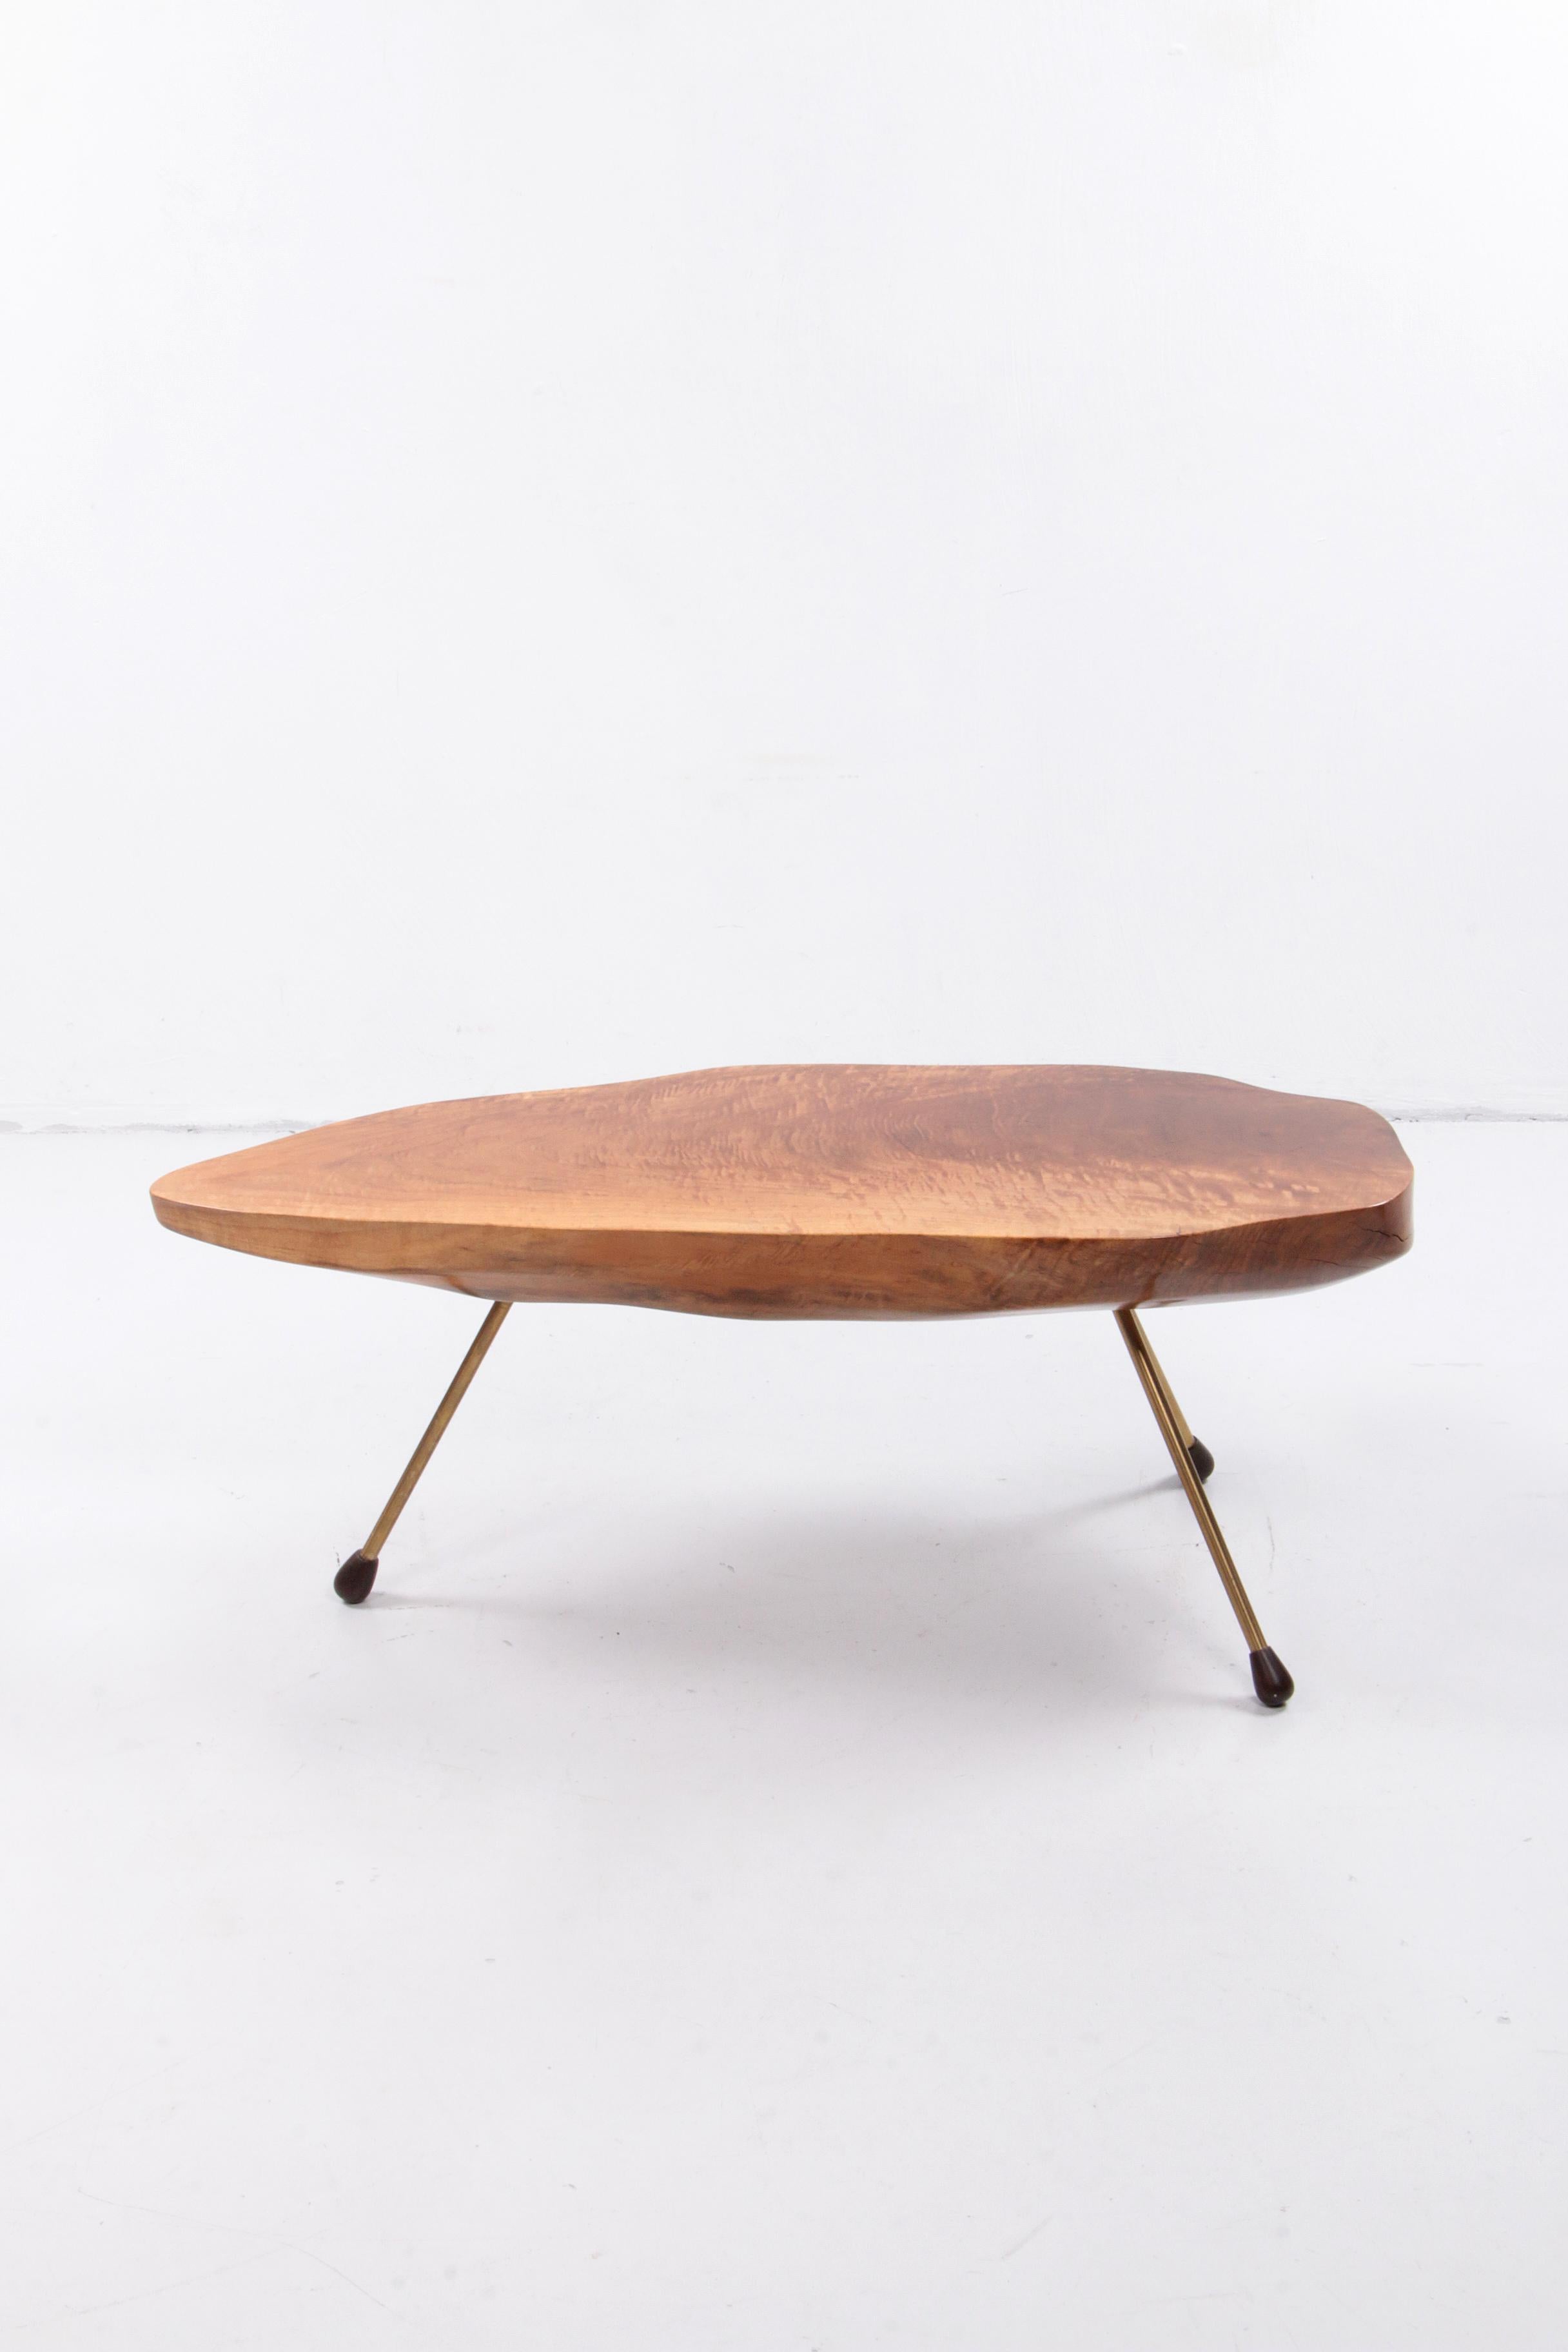 Carl Aubock Design Coffee Table Walnut with Copper Legs, 1950s Austria For Sale 6